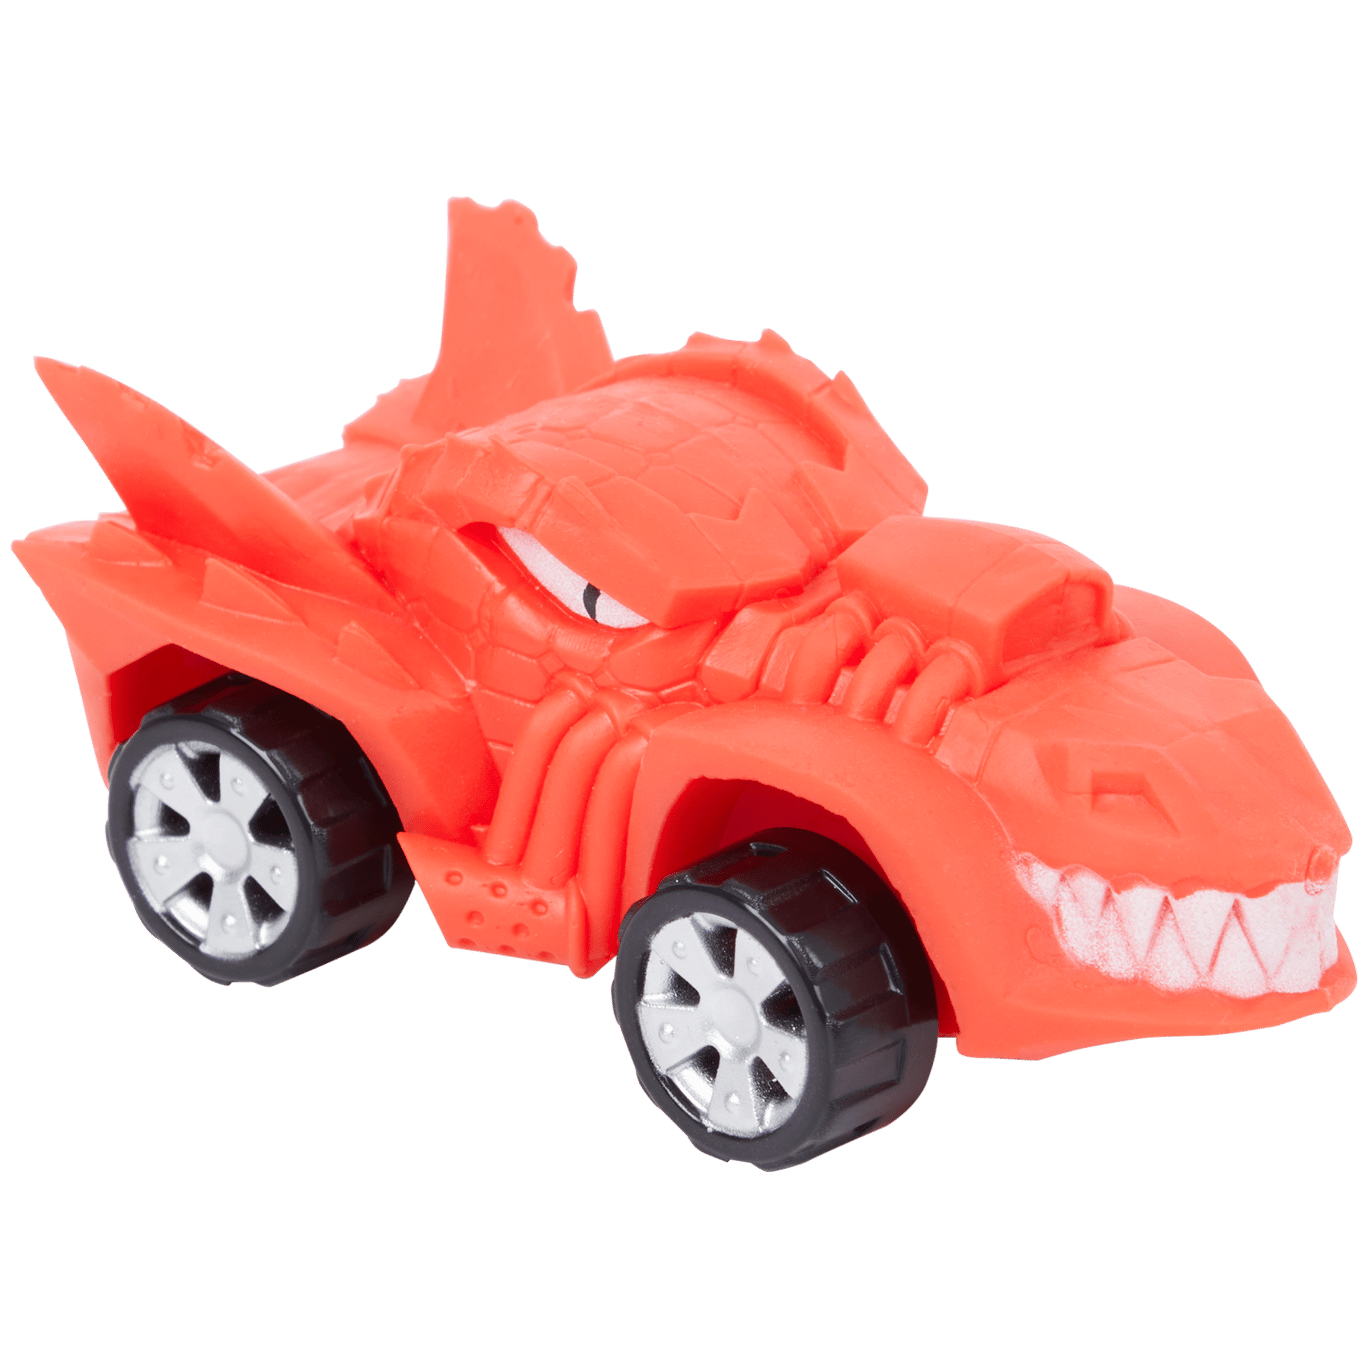 Street Smash uitrekbare speelgoedauto Monster